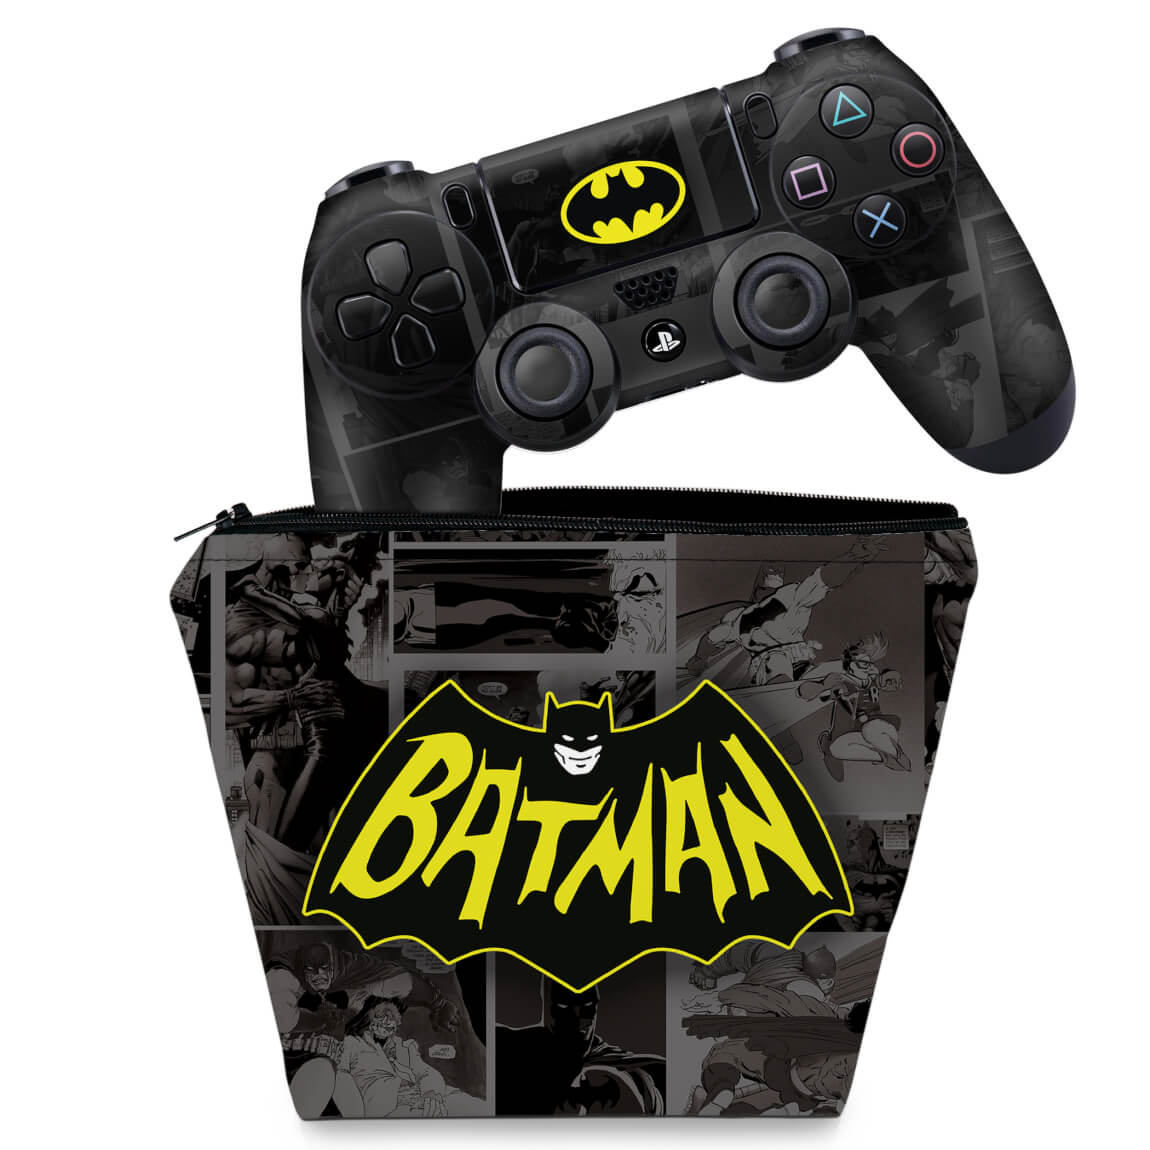 KIT Capa Case e Skin PS4 Controle - Batman Comics - Pop Arte Skins